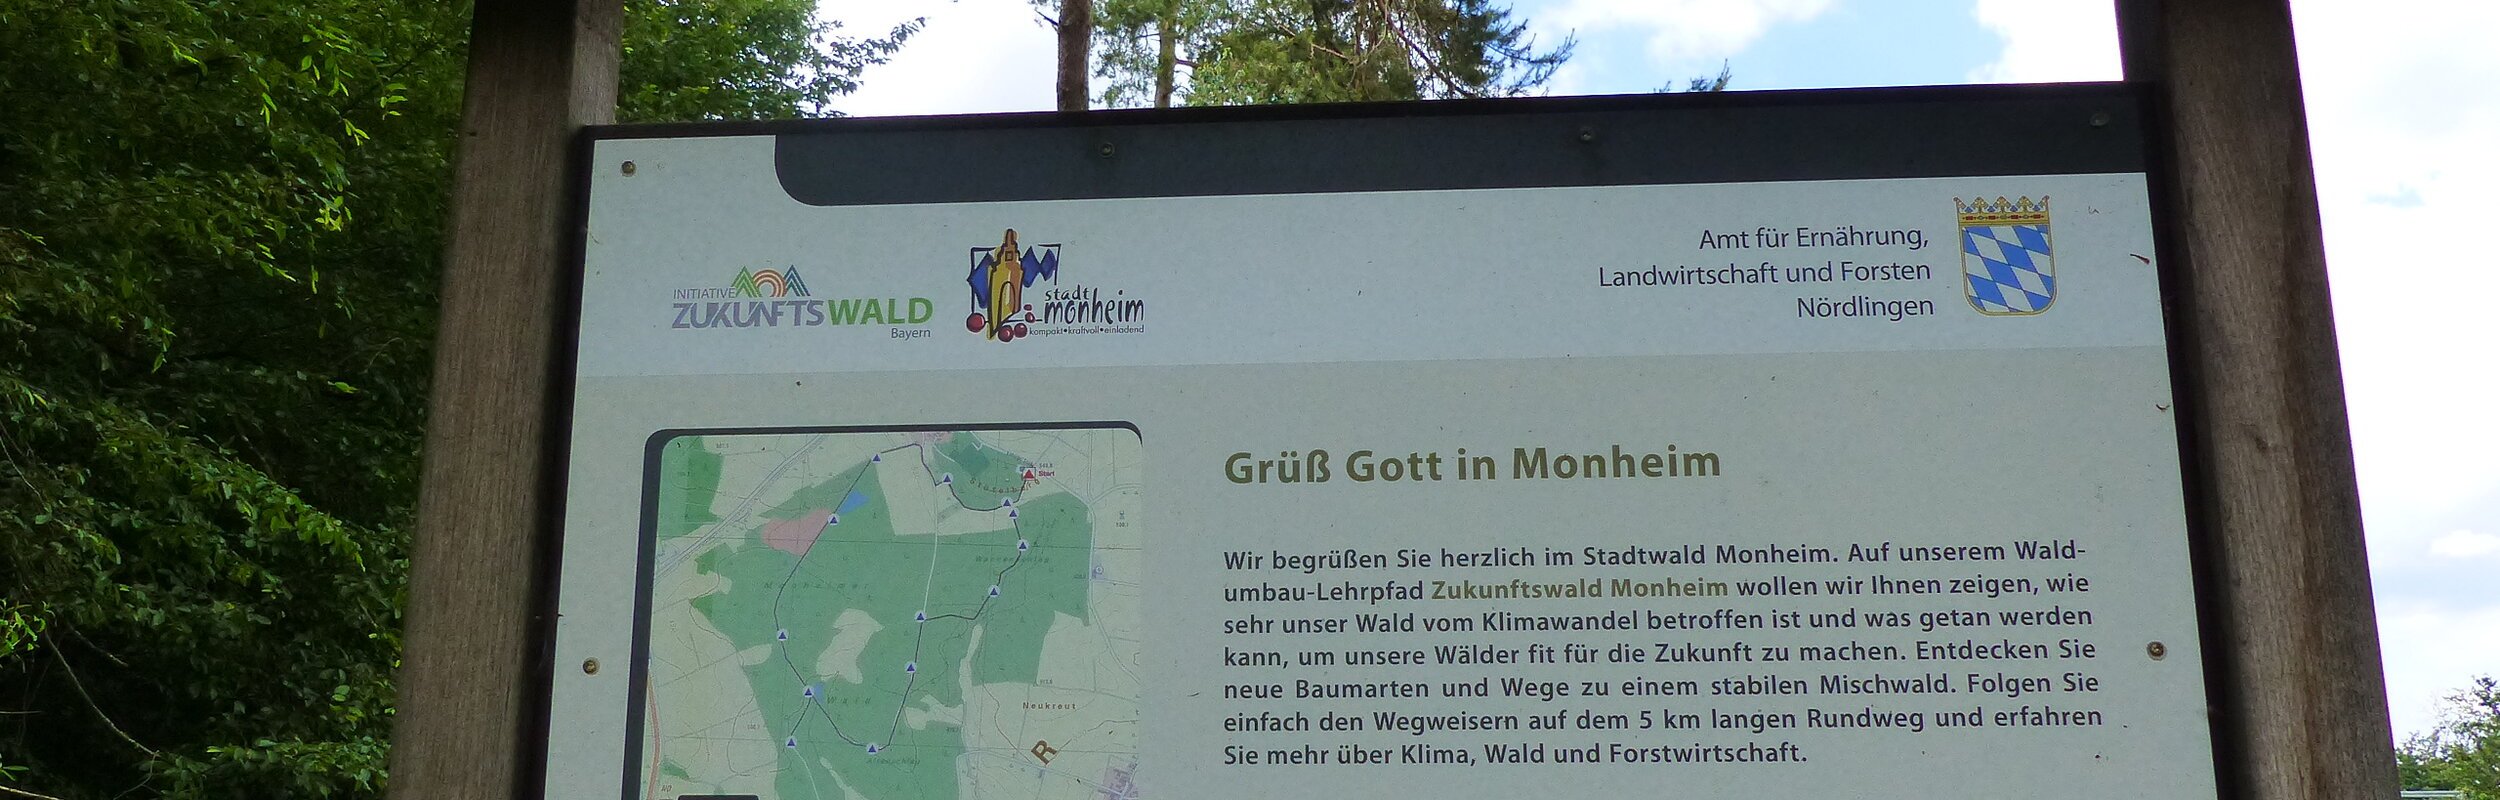 Themenpfad Zukunftswald Monheim - Grüß Gott in Monheim